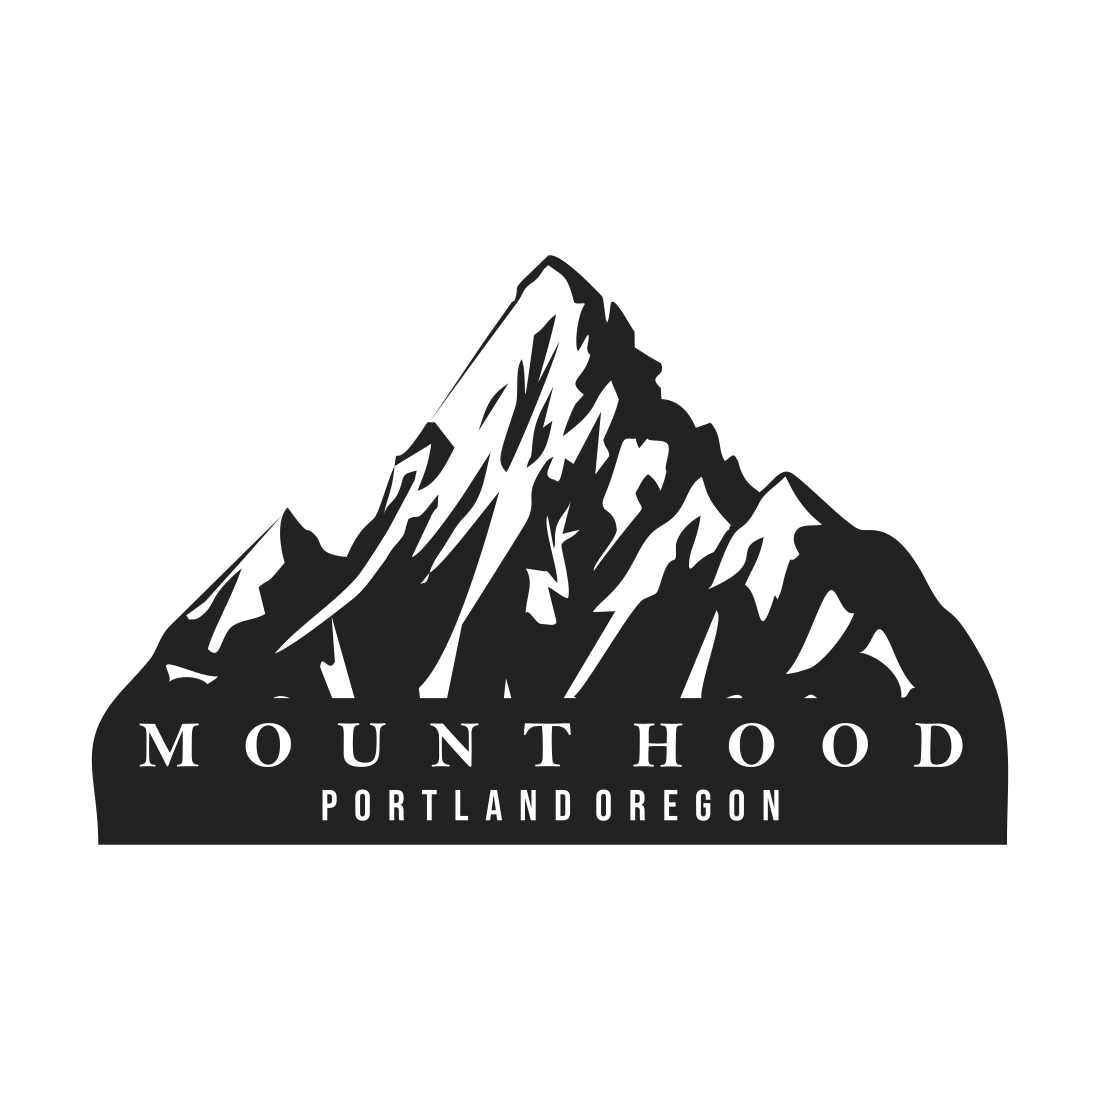 Silhouette of Mount Hood Portland Oregon Mountain logo design preview image.